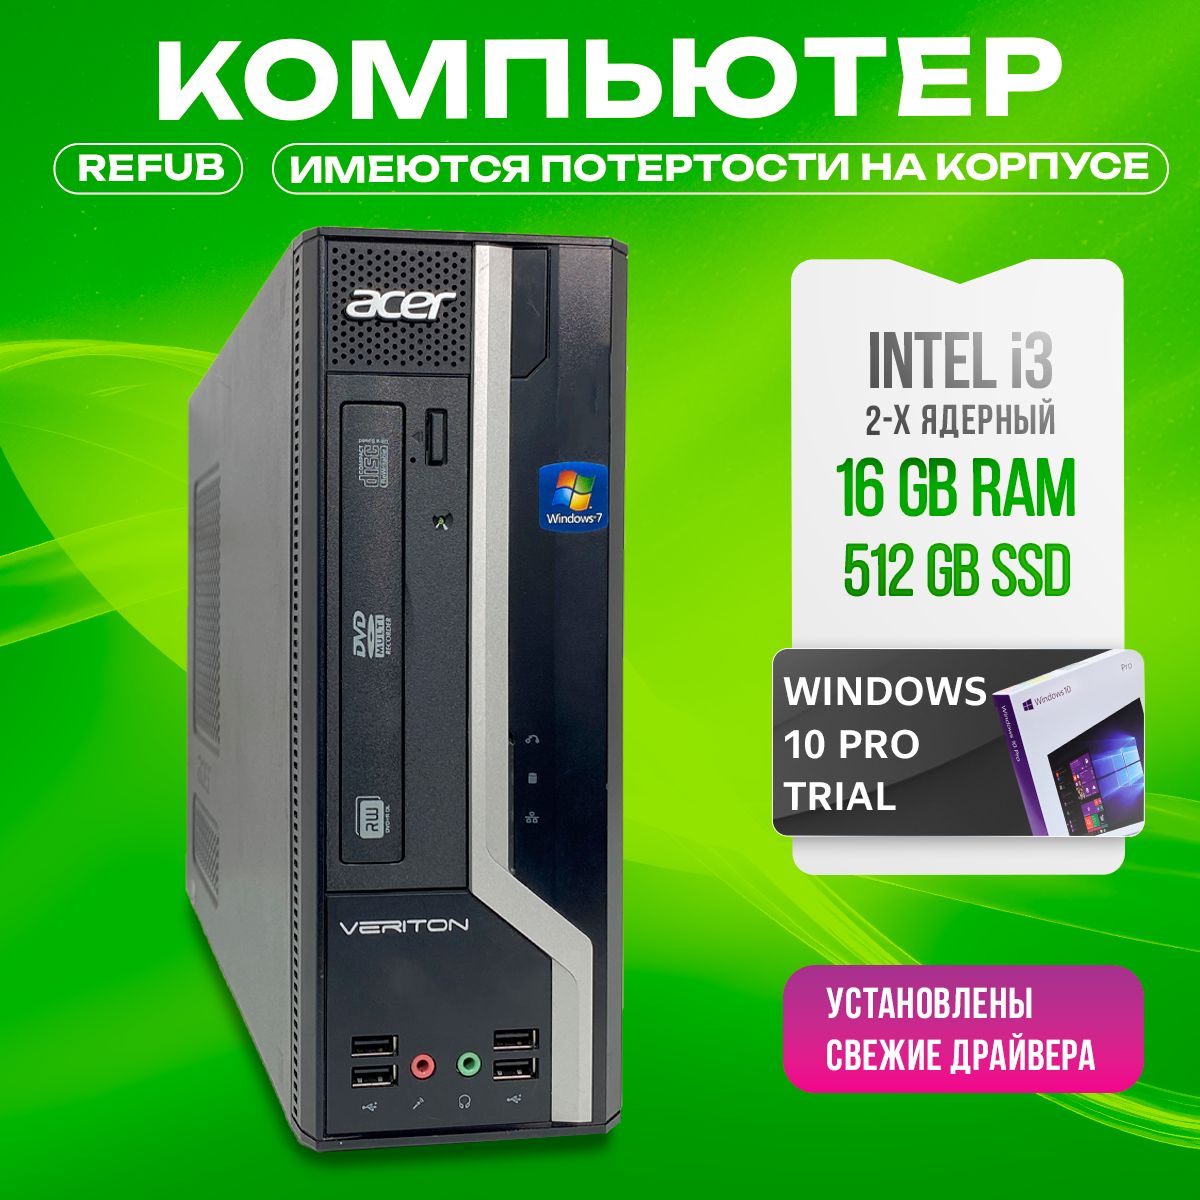 Системный блок Acer Veriton X-series i3-3210/DDR3 16GB/SSD 512GB/ Windows 10 pro Trial